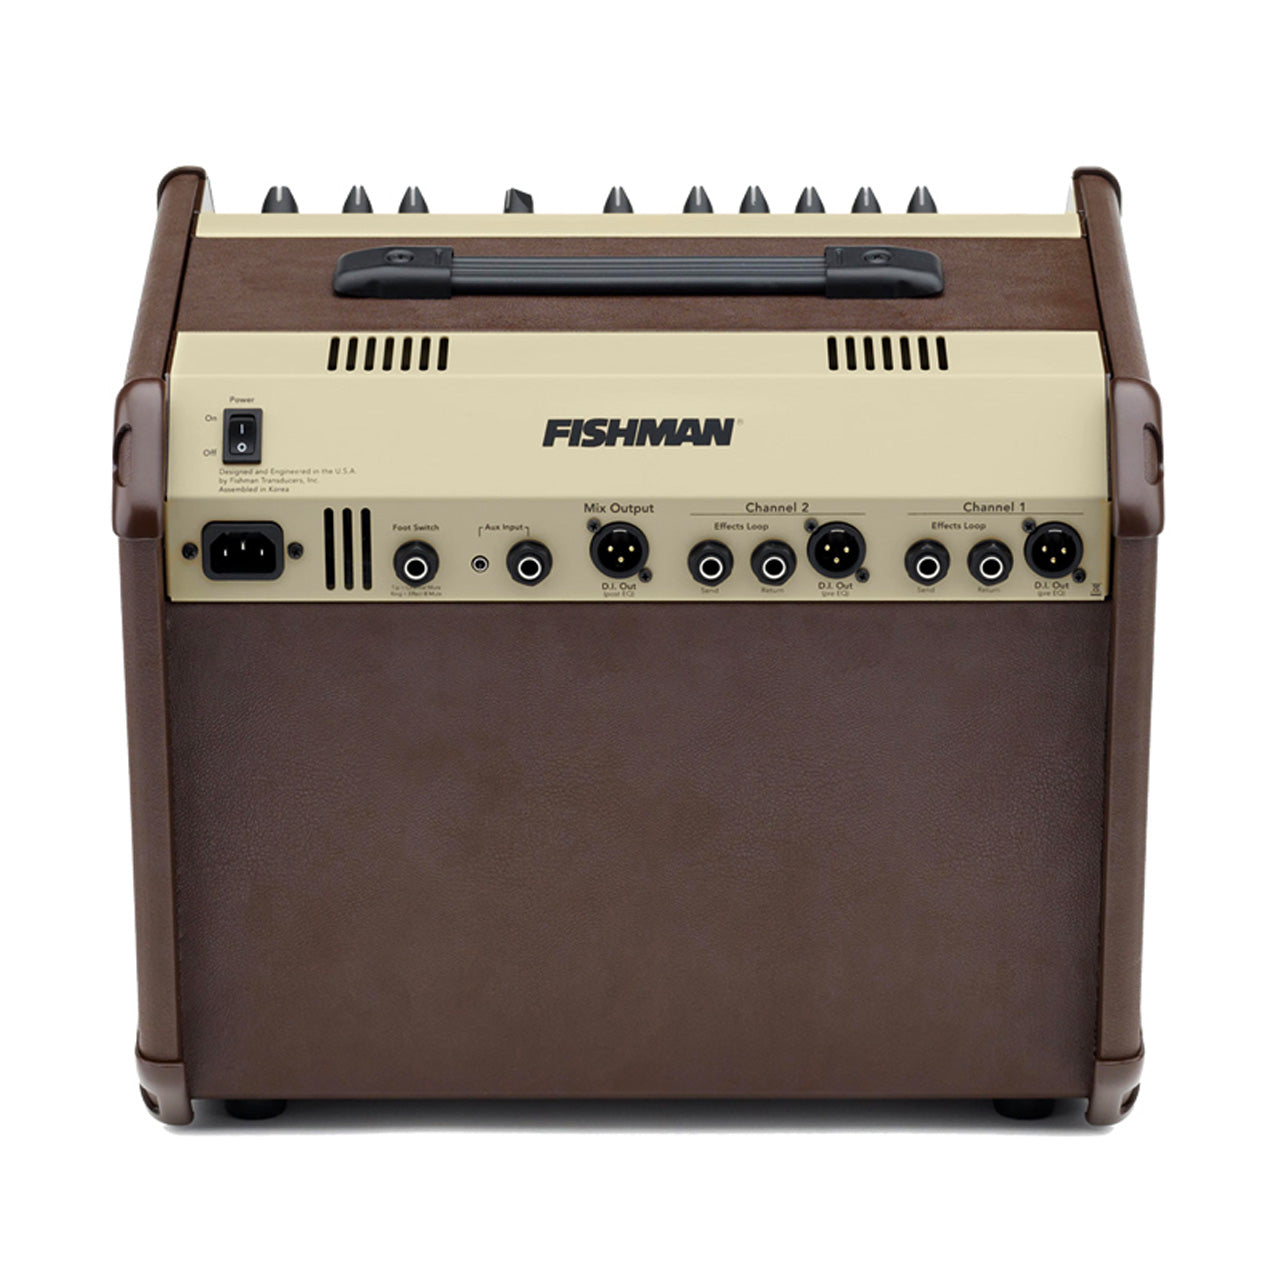 Fishman PRO-LBX-600 Loudbox Artist Amplifier, back